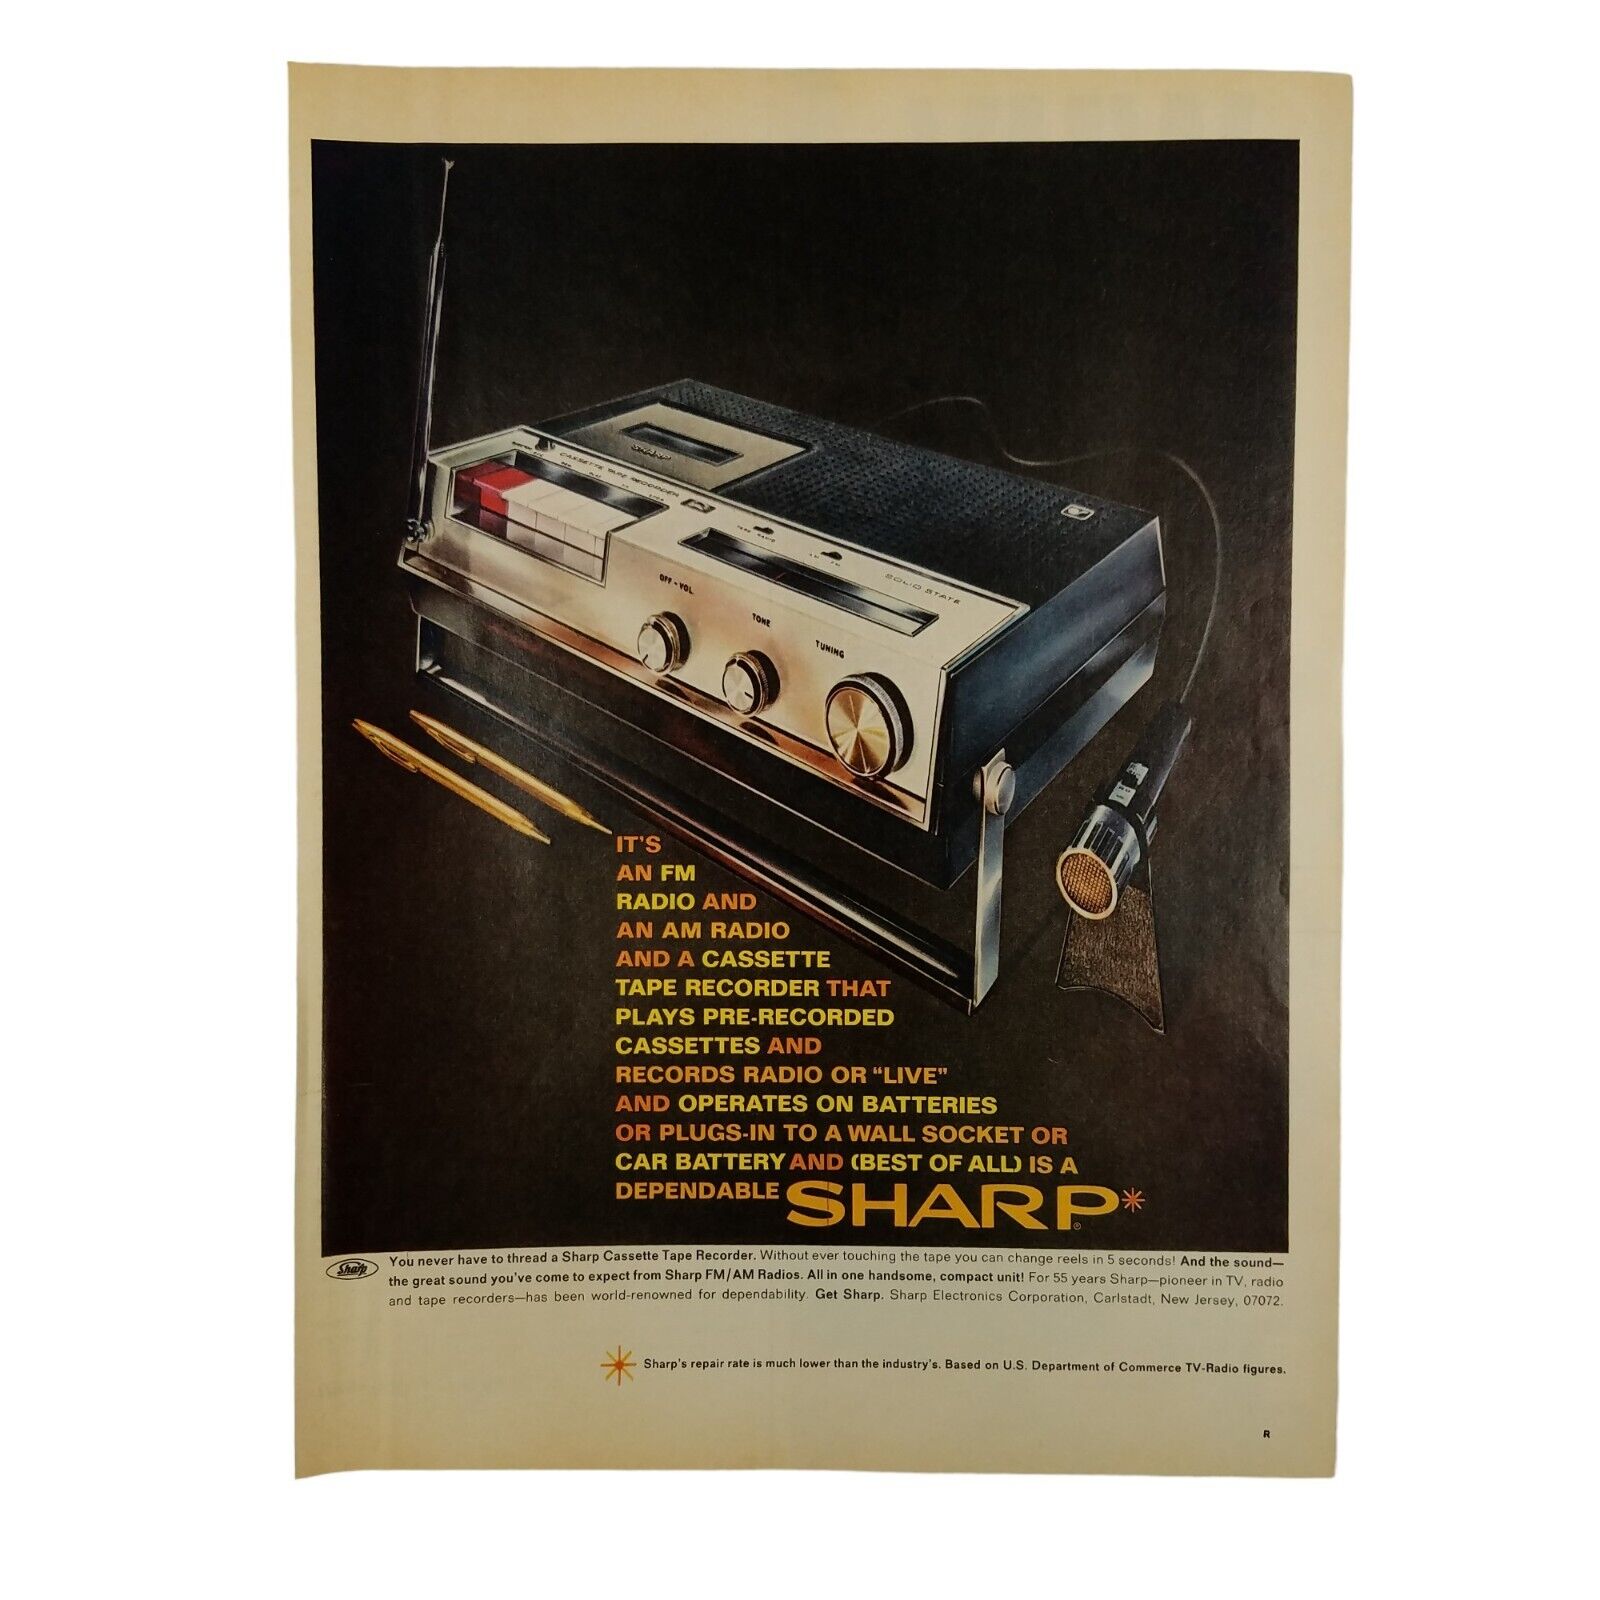 1969 Sharp Vintage Print Ad Its An FM AM Radio Cassette Tape Recorder Dependable